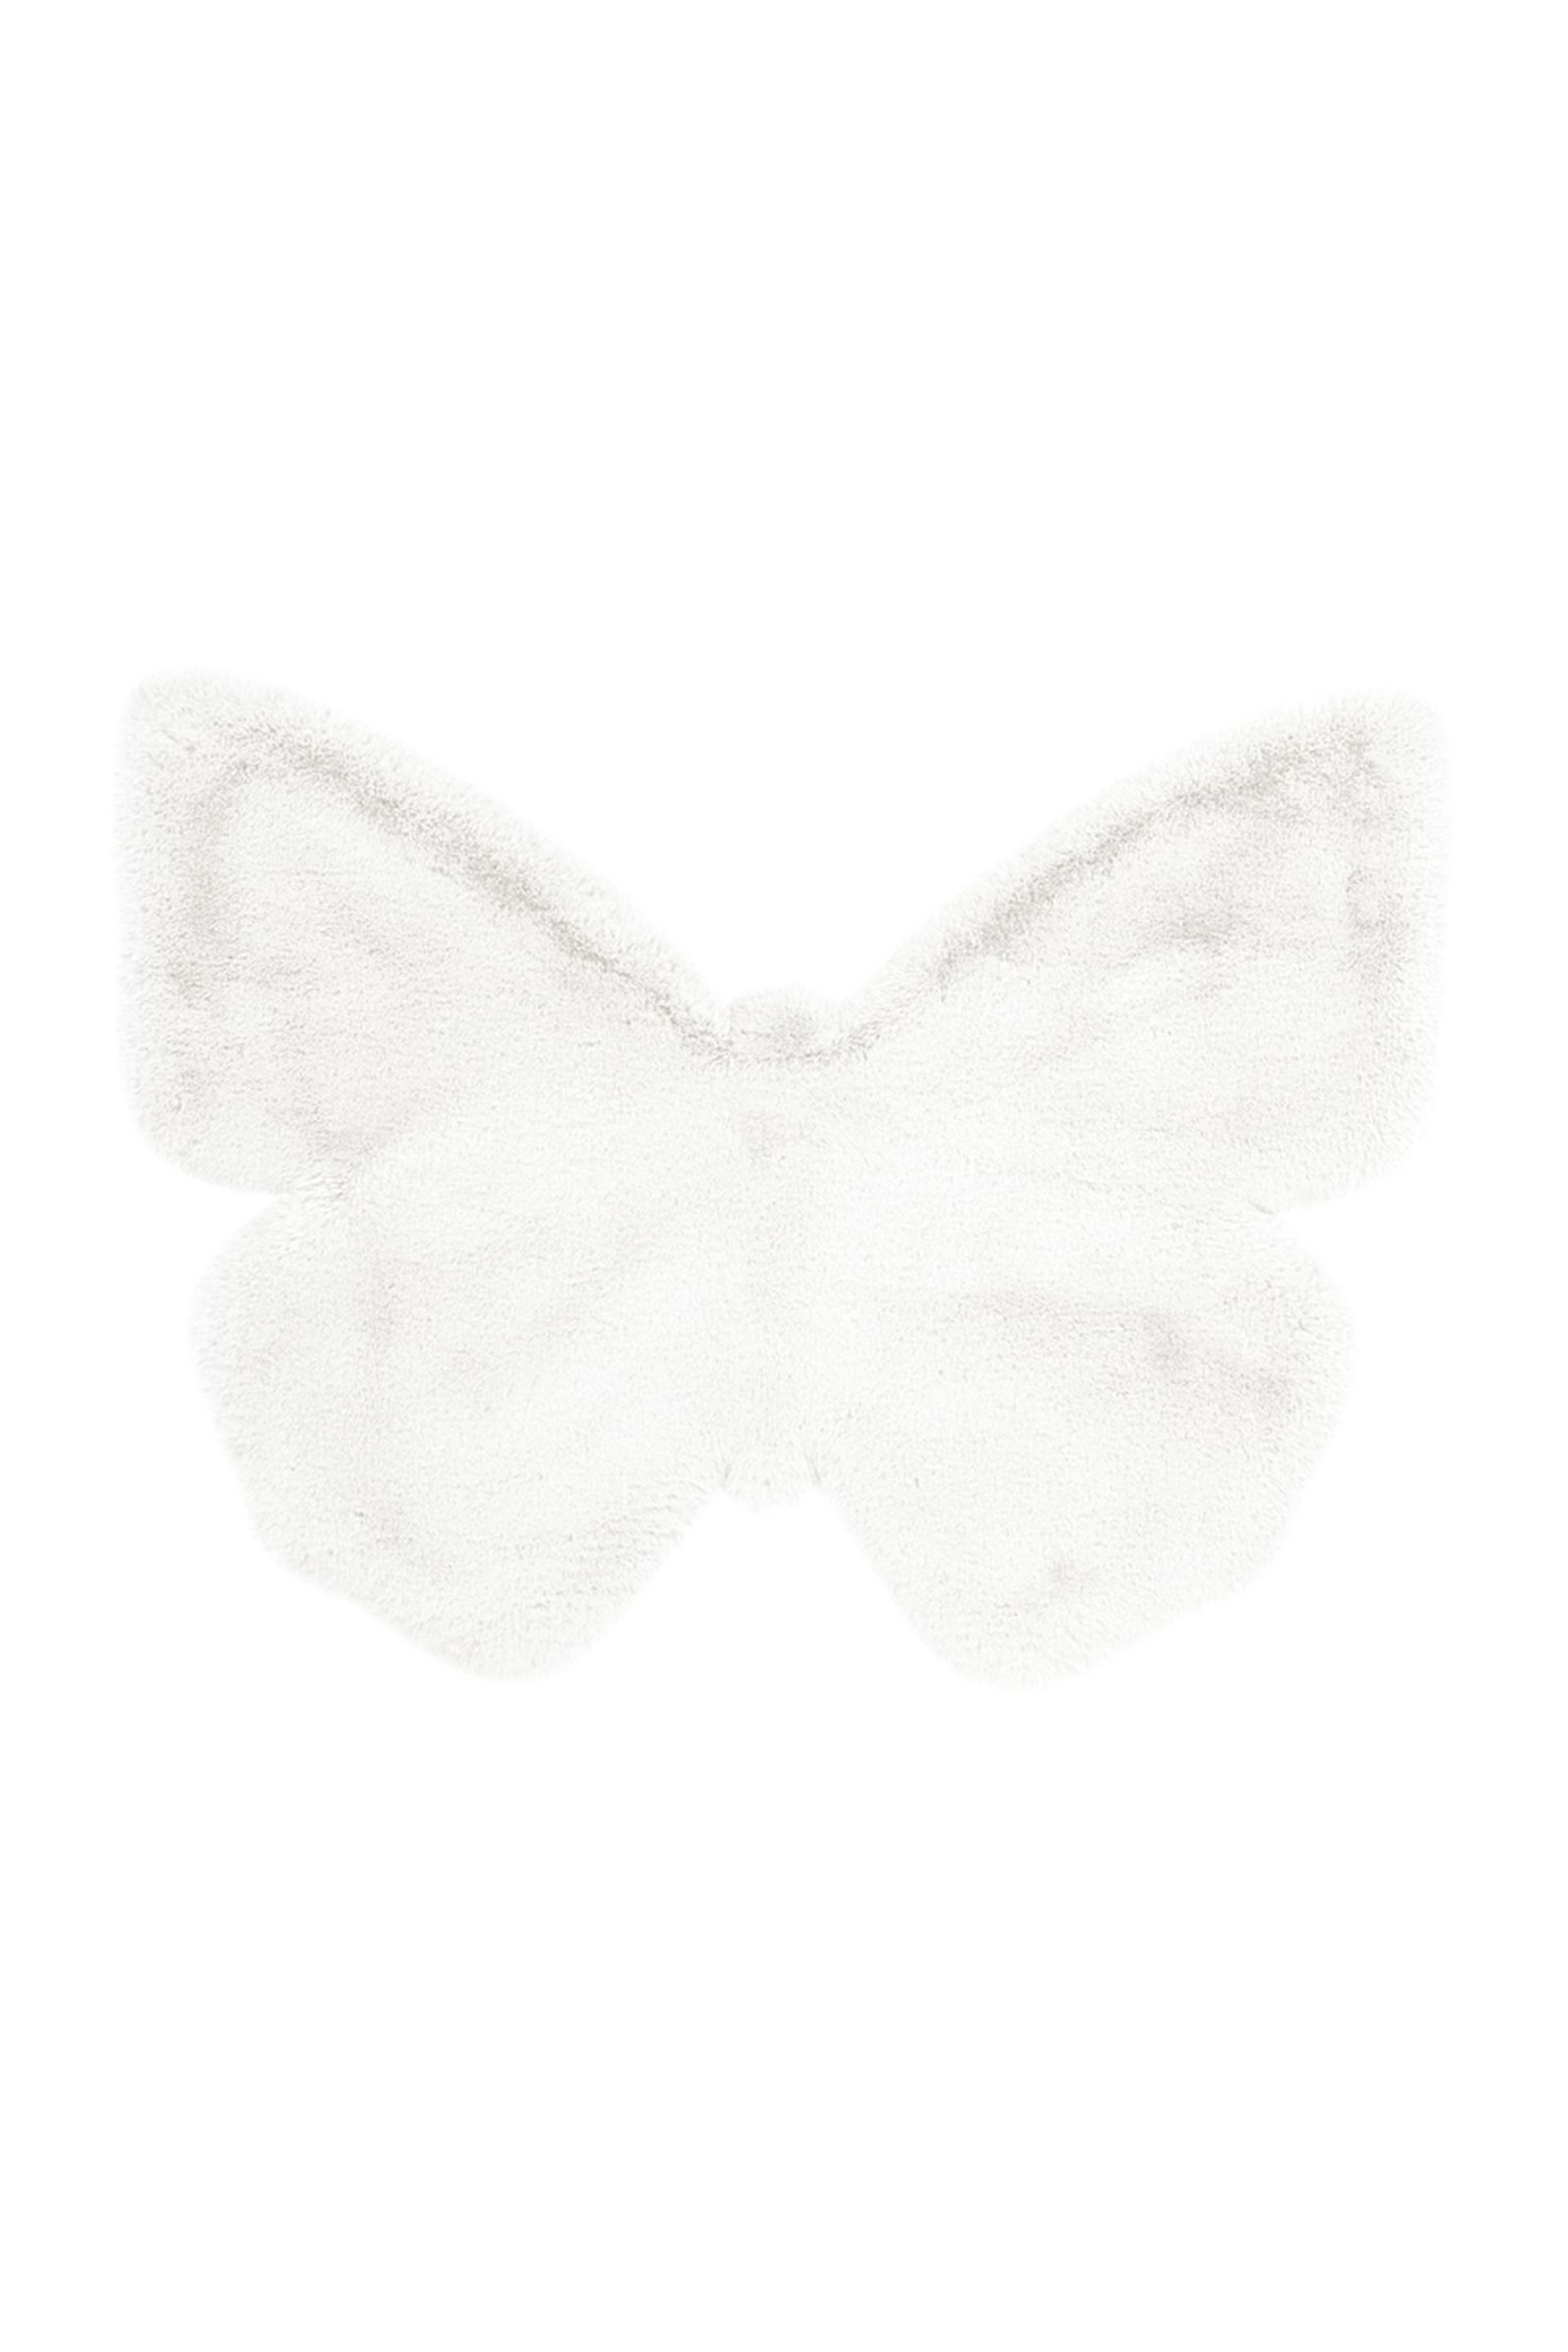 Teppich Lovely Kids 1125-Butterfly Weiß 70 cm x 90 cm